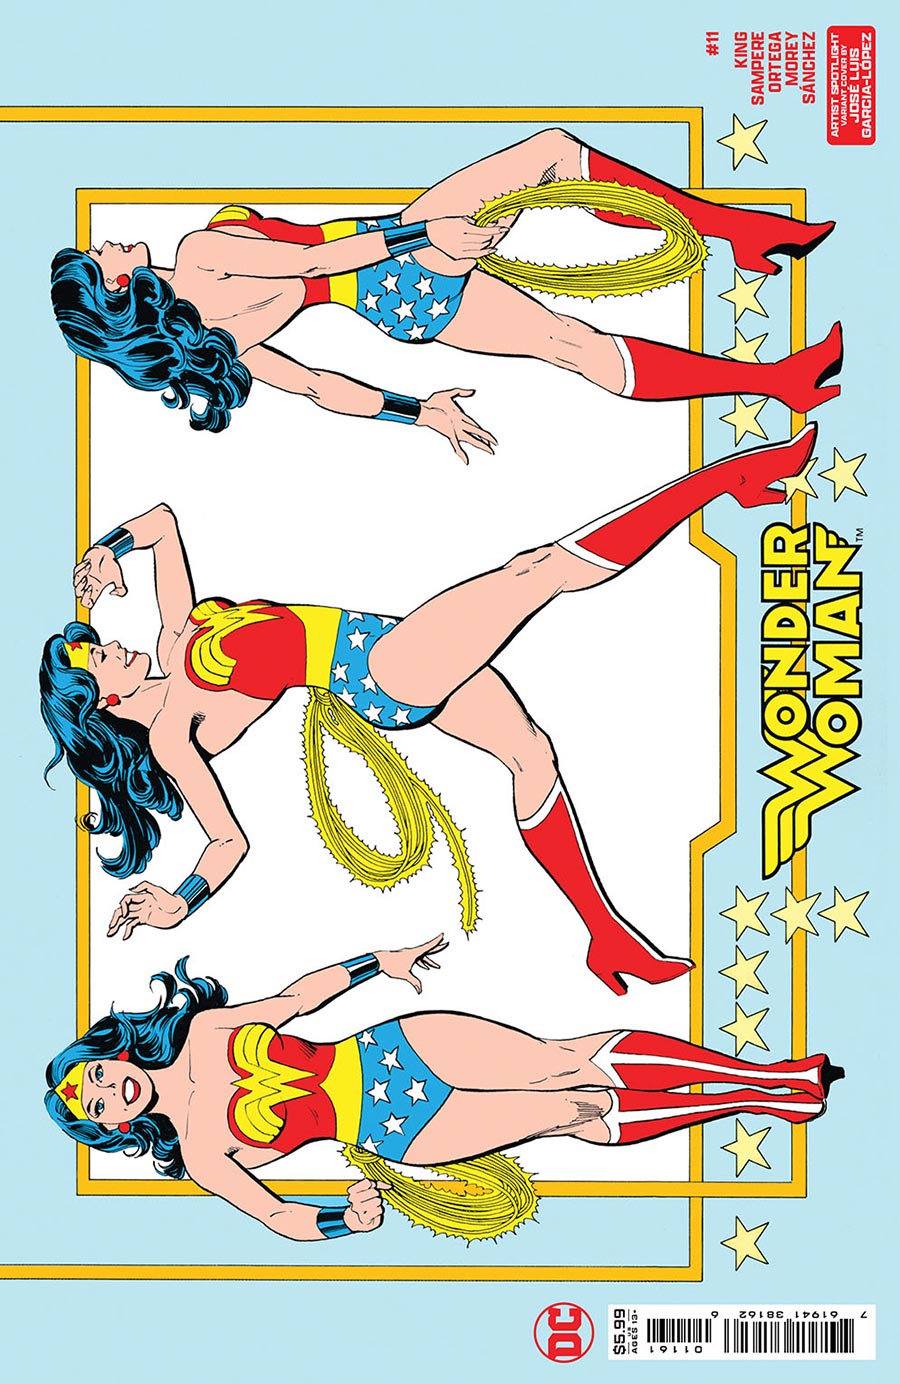 Wonder Woman Vol 6 #11 Cover D Variant Jose Luis Garcia-Lopez Artist Spotlight Wraparound Card Stock Cover (Absolute Power Tie-In)